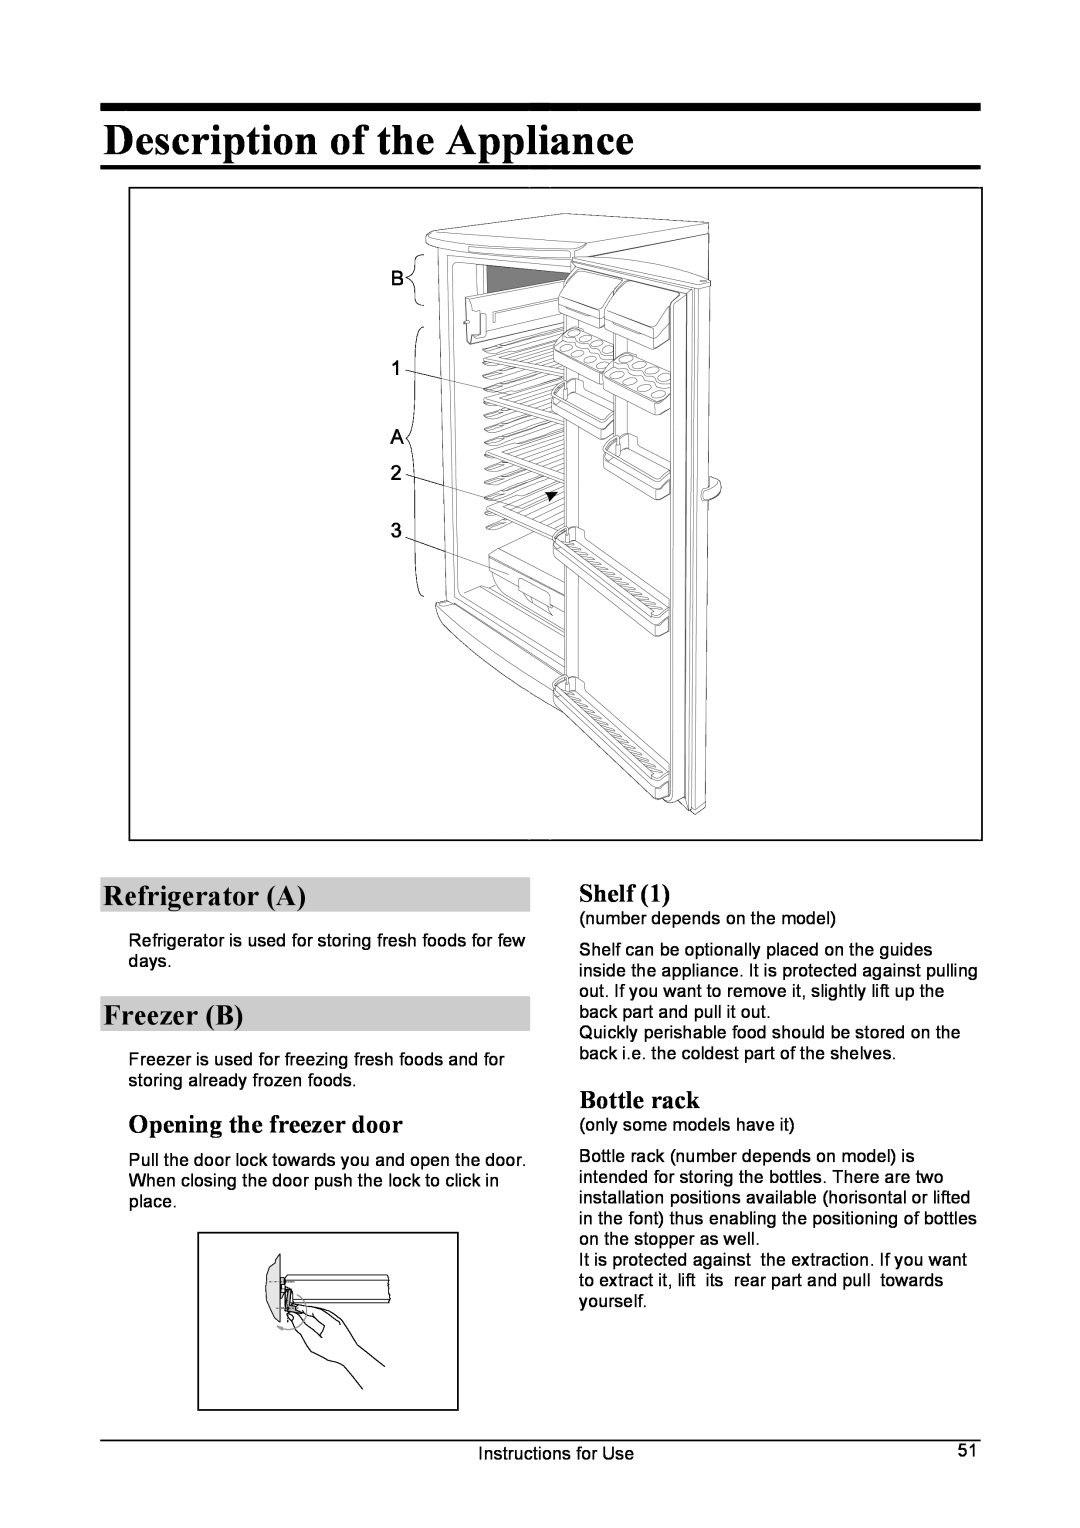 Smeg FA28AP, FA28A1 Description of the Appliance, Refrigerator A, Freezer B, Opening the freezer door, Bottle rack, Shelf 